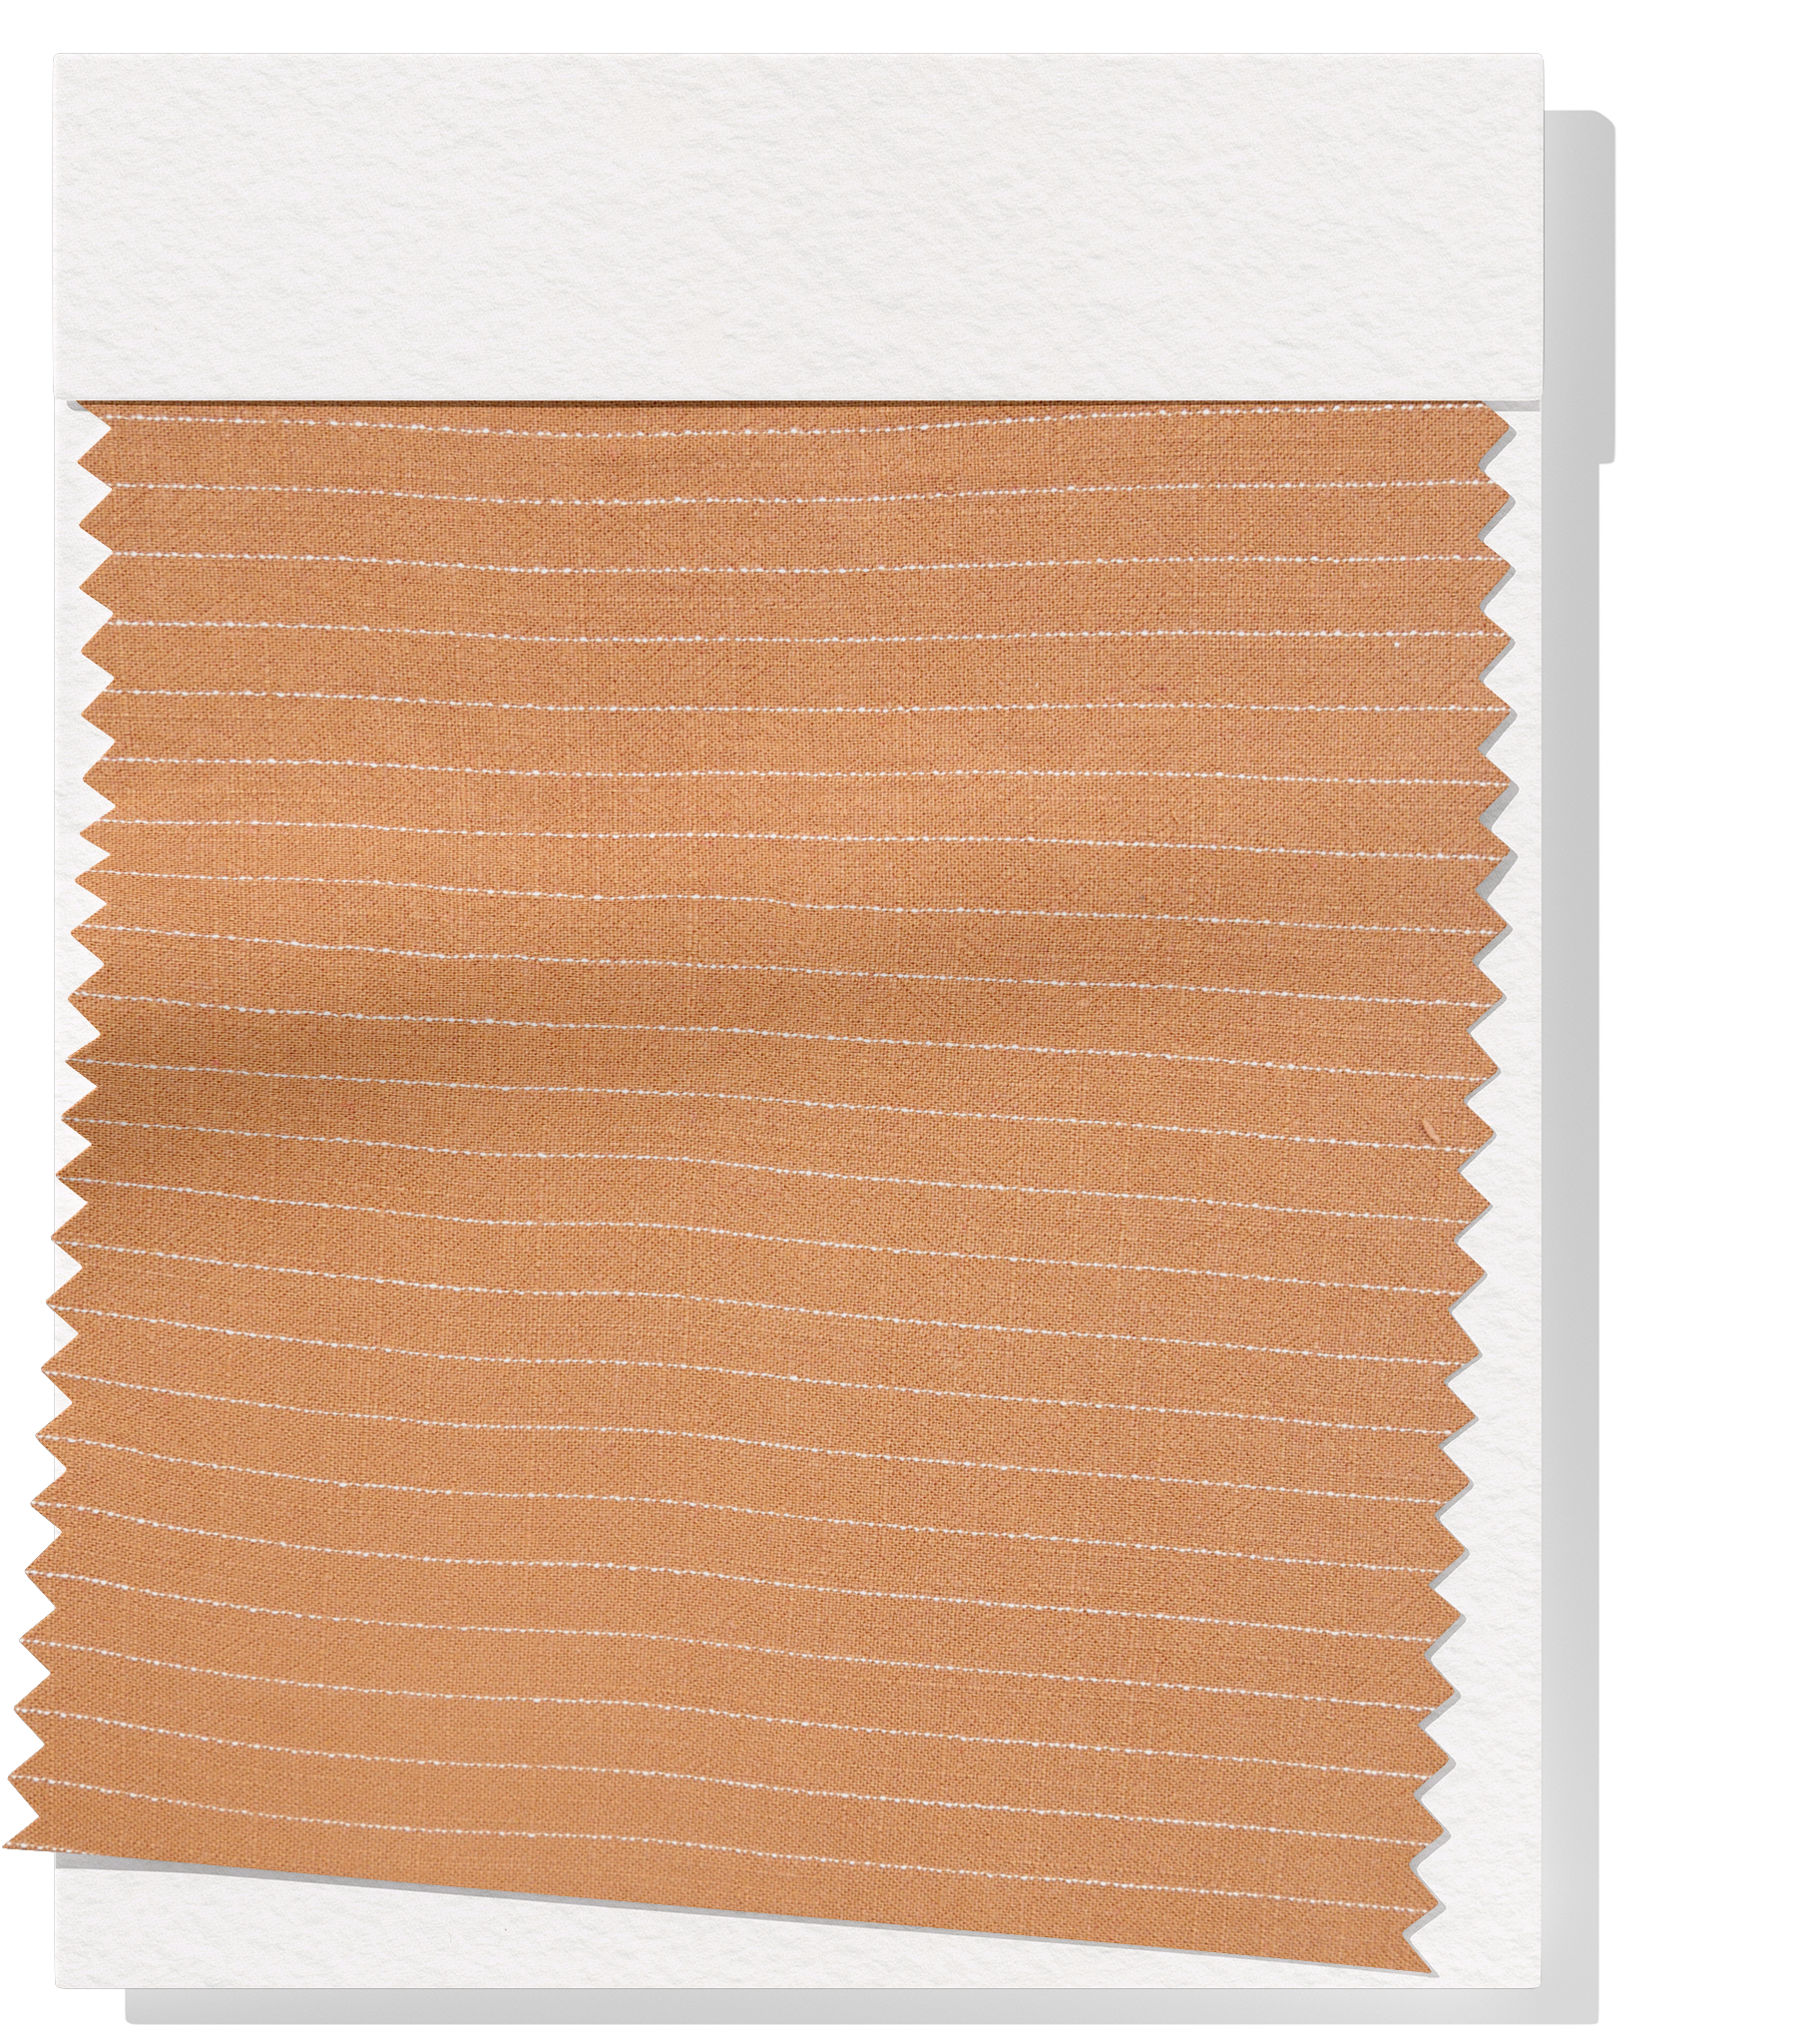 Striped Linen / Ramie $18.00p/m - Tan with White Stripes